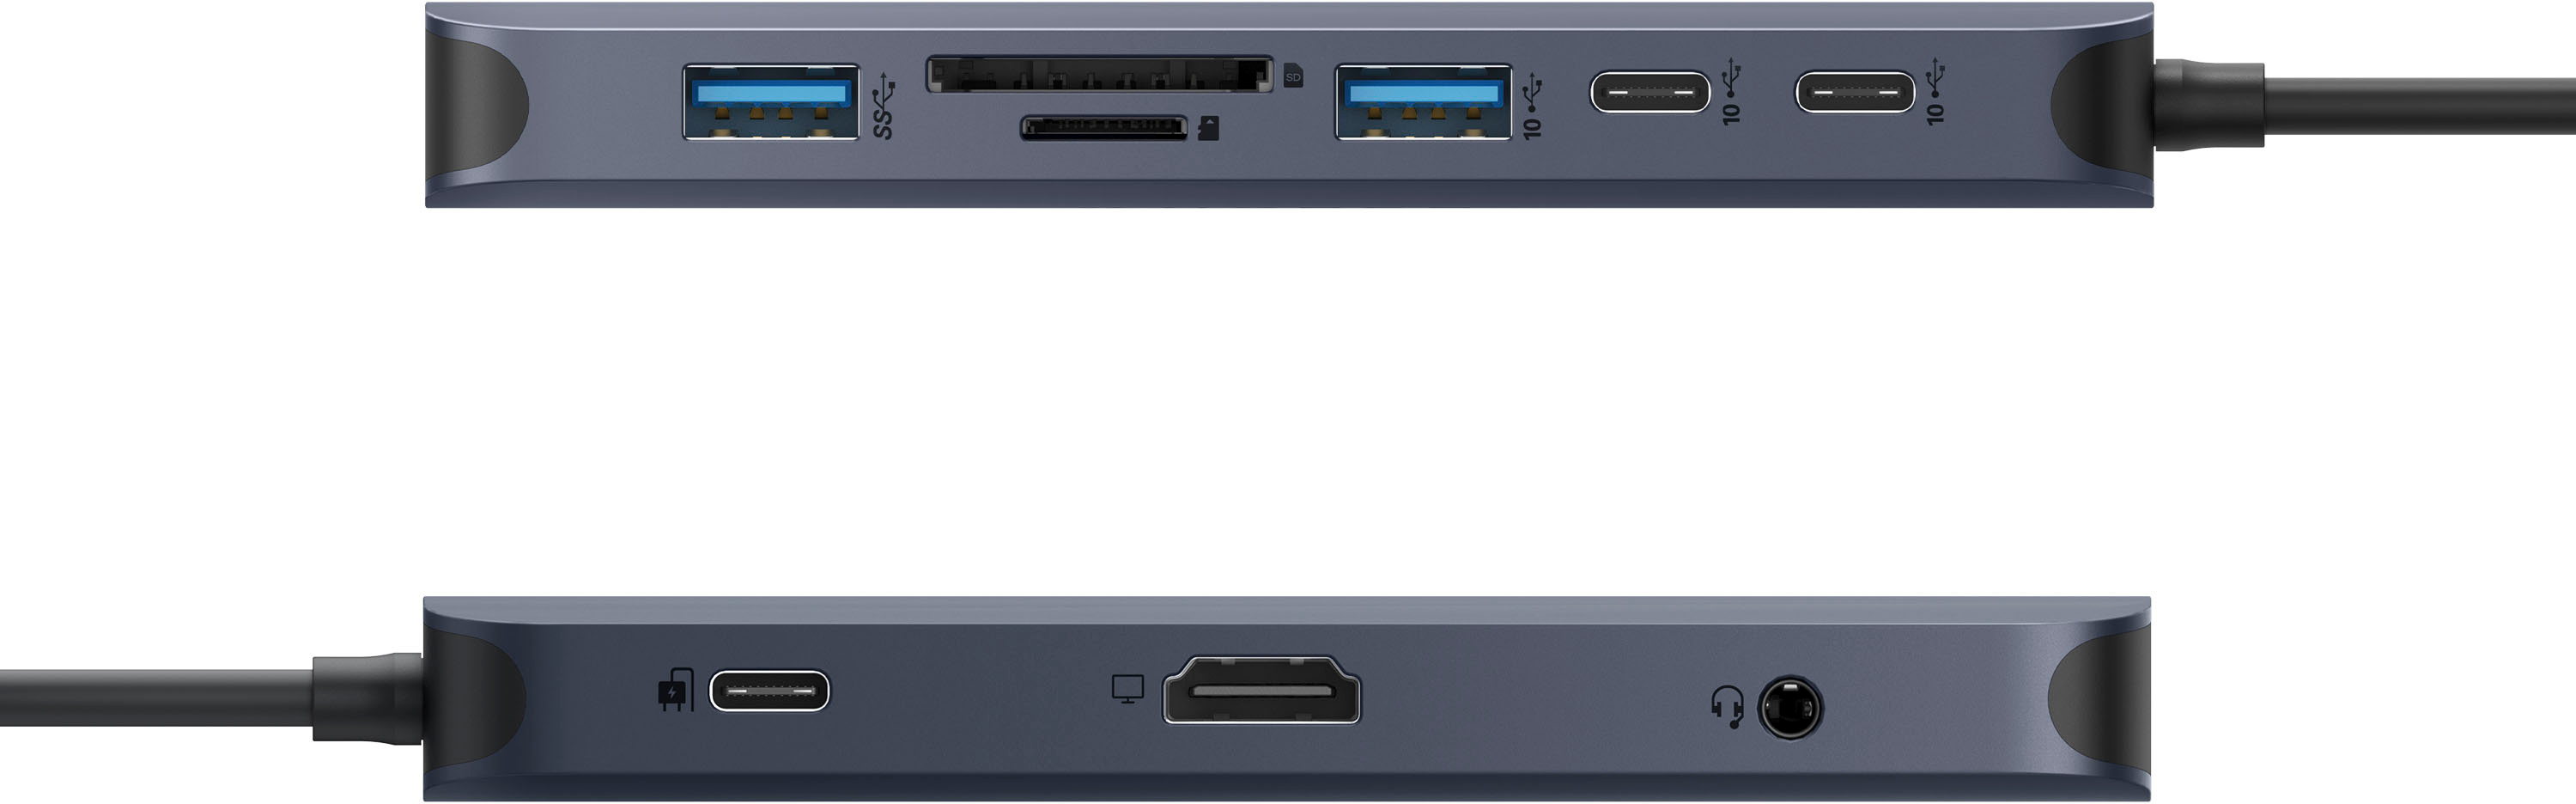 Left View: Satechi - Type-C Aluminum Stand and Hub for Mac Mini & Mac Studio - USB-C Data Port, Micro/SD Card Reader, 3 USB 3.0 & Audio Jack